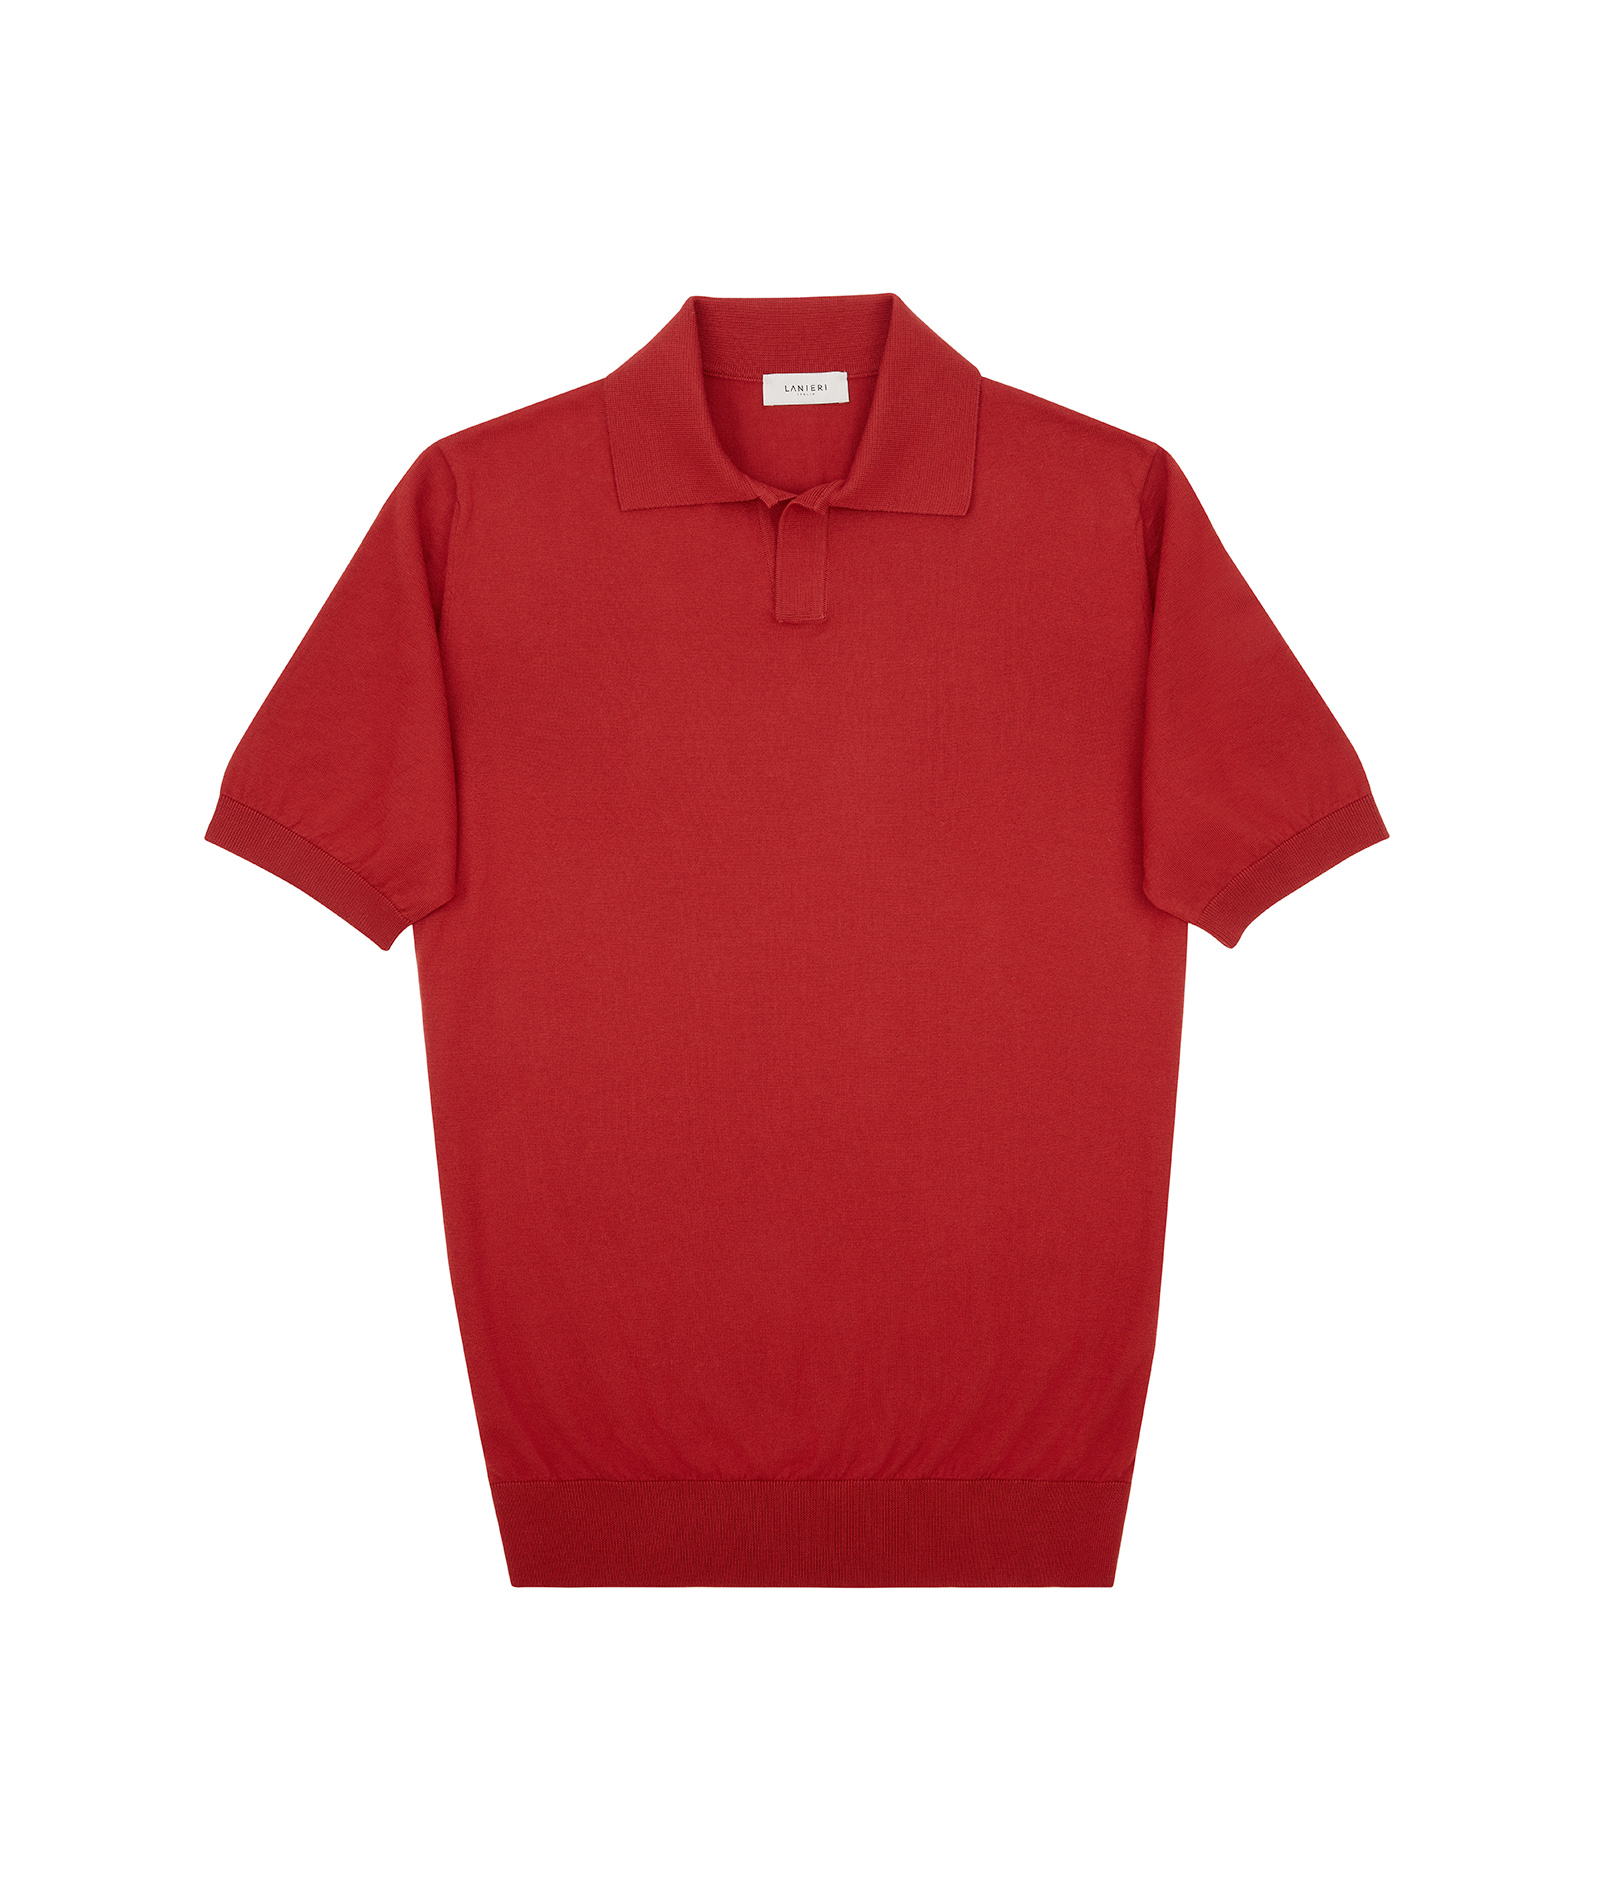 Brick red cotton knit T-Shirt